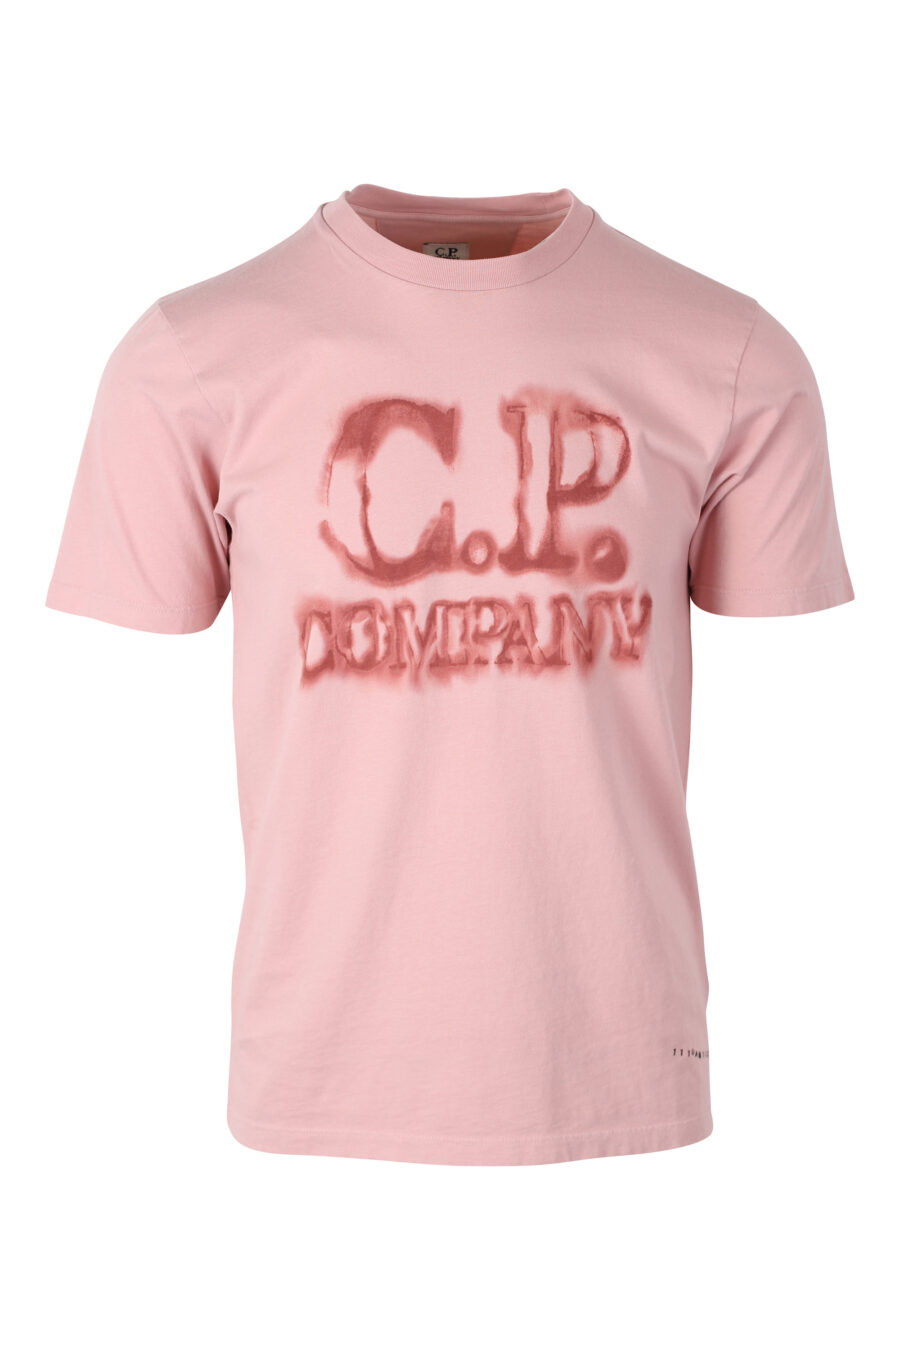 T-shirt rose avec maxilogo "spray" - IMG 2401